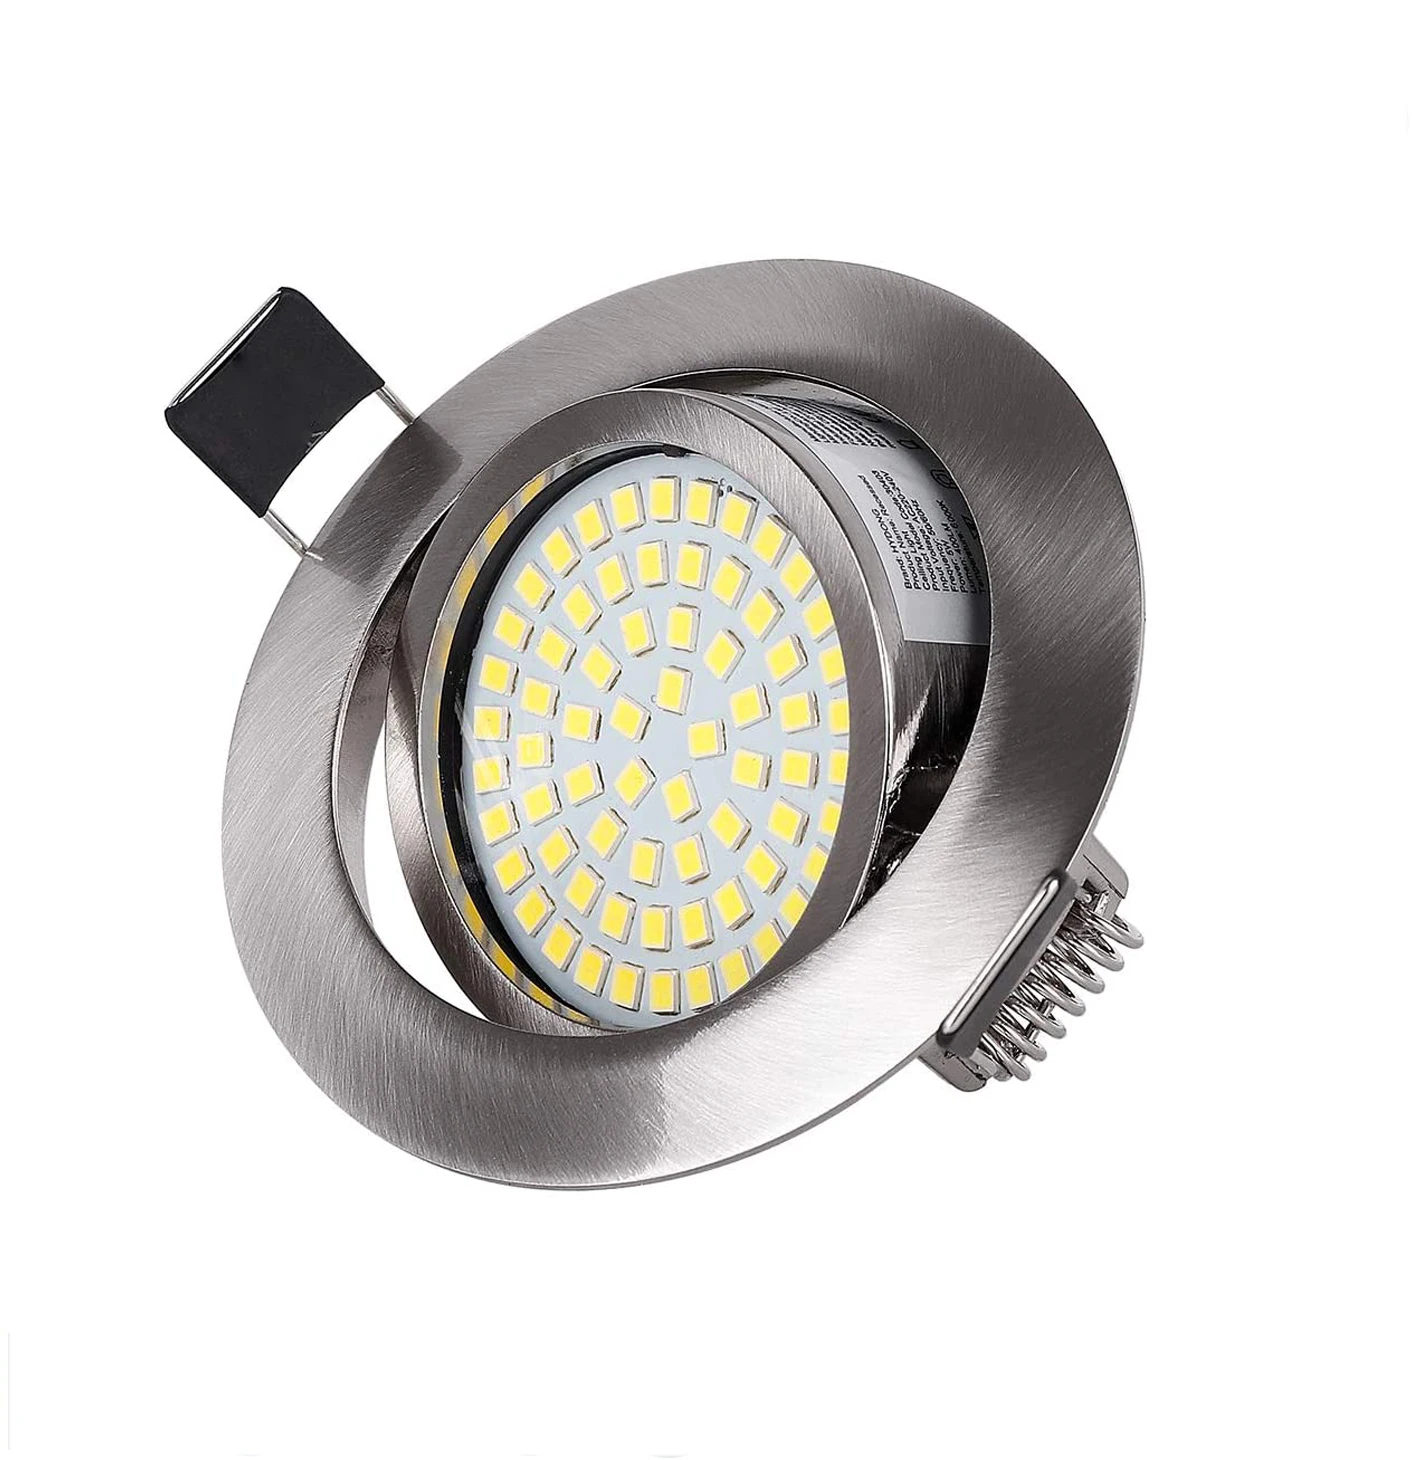 Ultra Slim 5W Modern LED Recessed Downlight IP44 Rotatable Ceiling Spotlight for Kitchen Bathroom Living Room